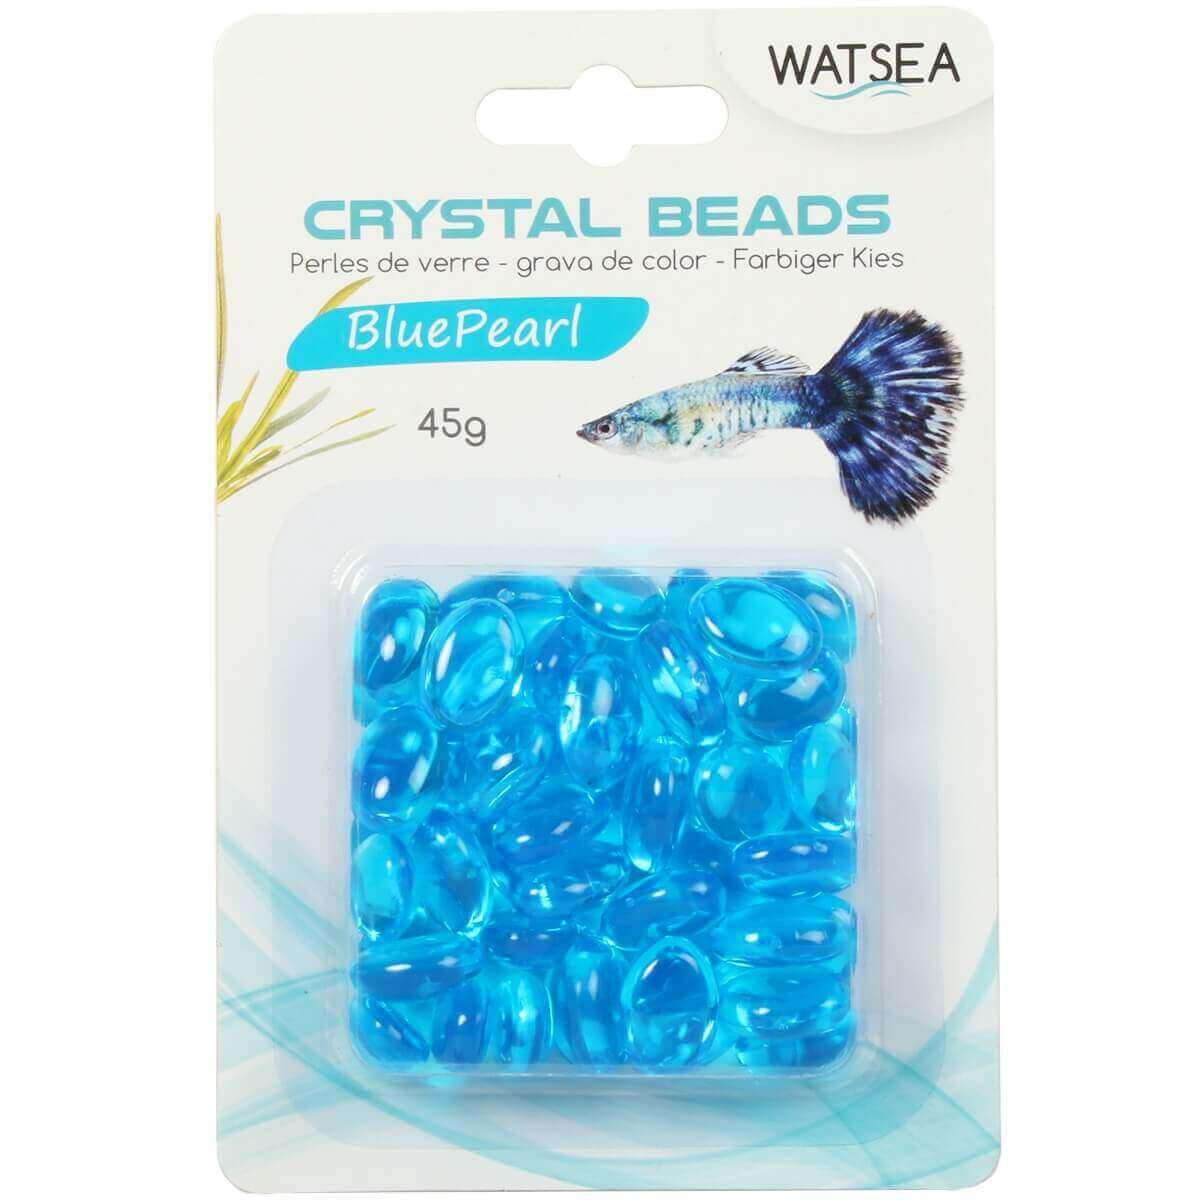 Perles de verre pour aquarium - Marron, Bleu, Jaune Watsea